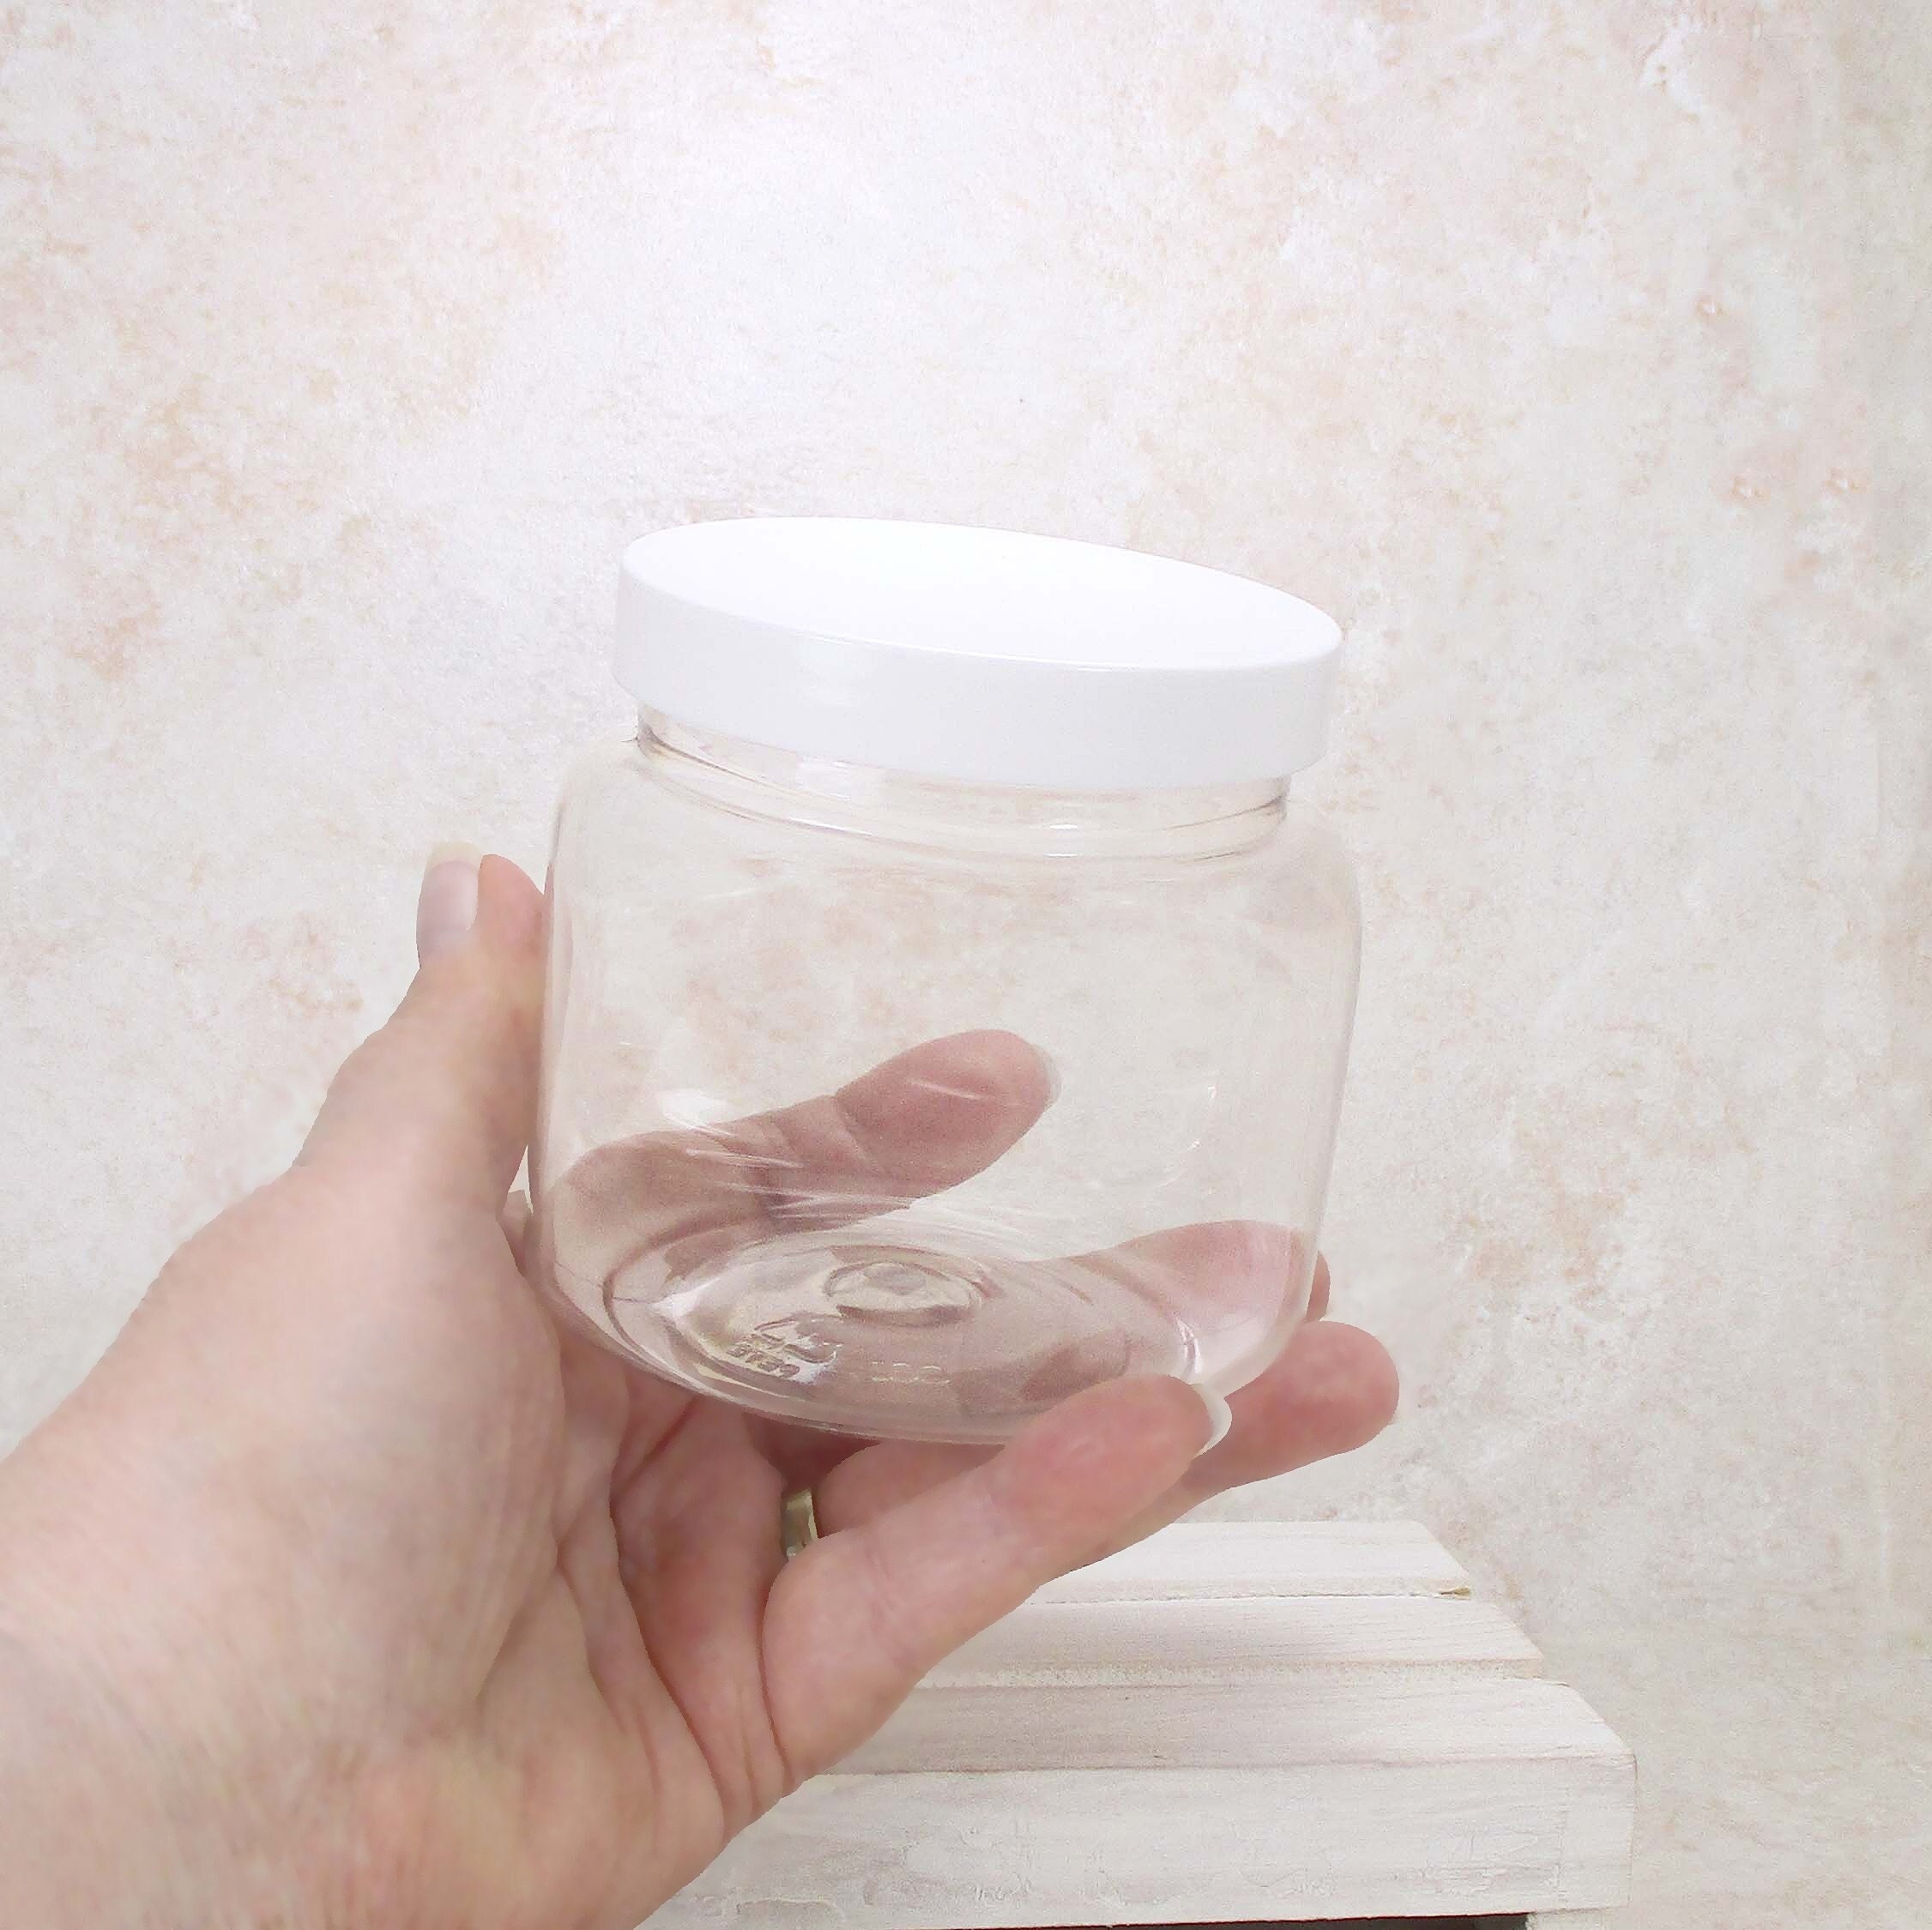 300ml Square Glass Jars With Lids (10 oz)